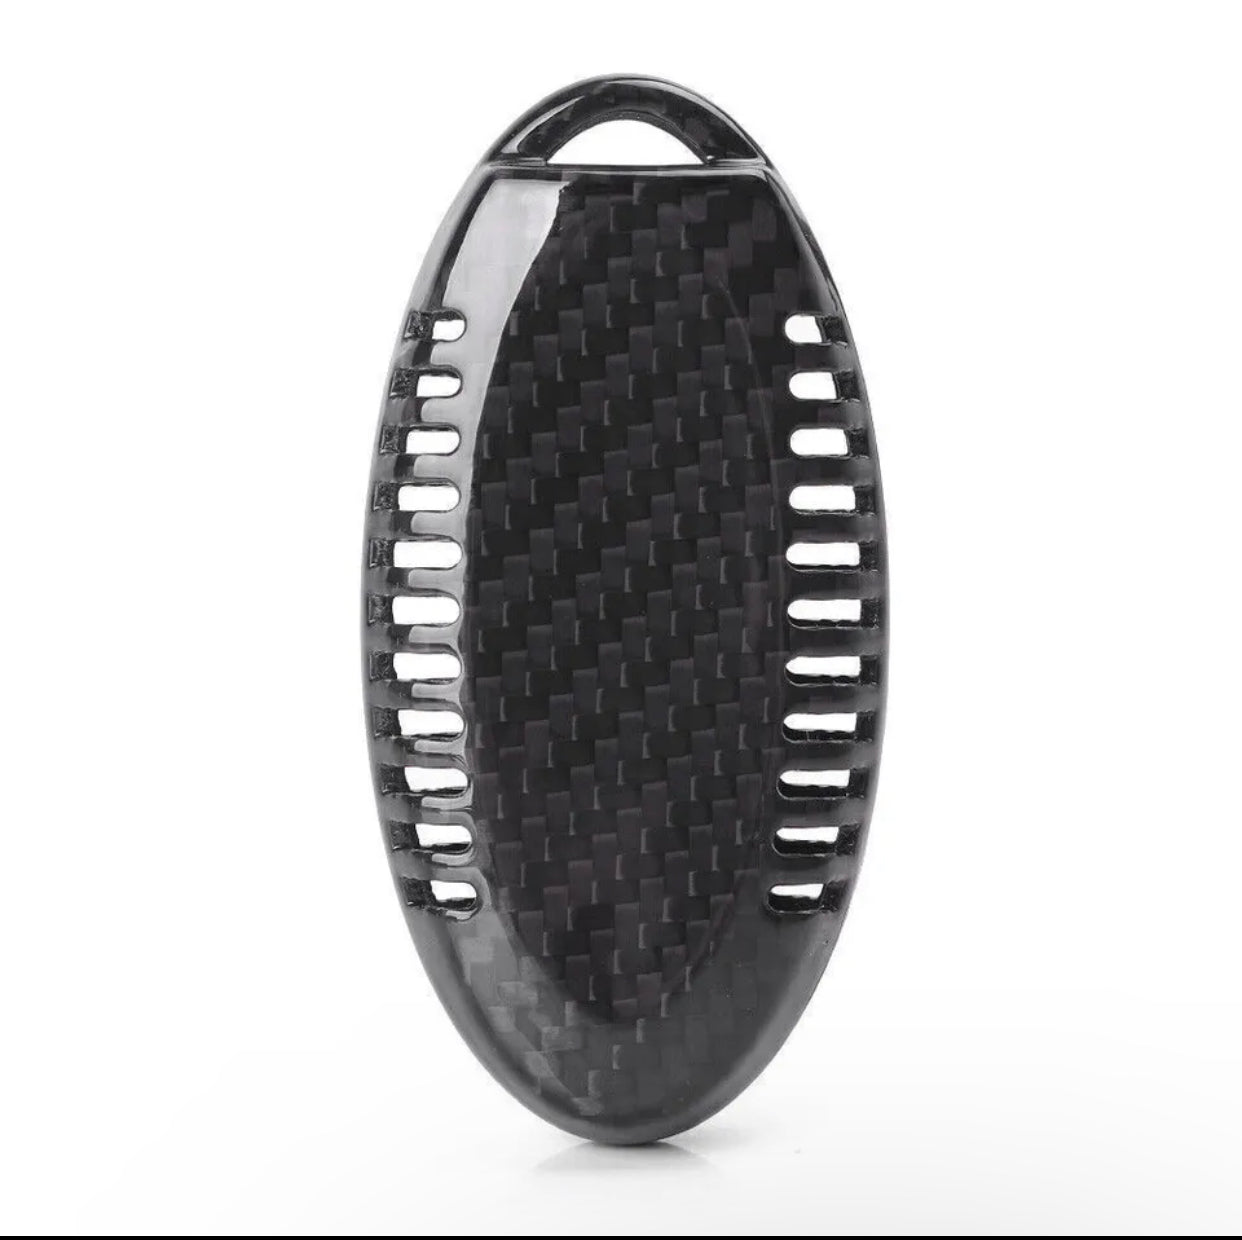 Real Carbon Fiber Key Remote FOB Case Shell For Infiniti Q50 Q70 Q60 G37 GTR Snap On Case